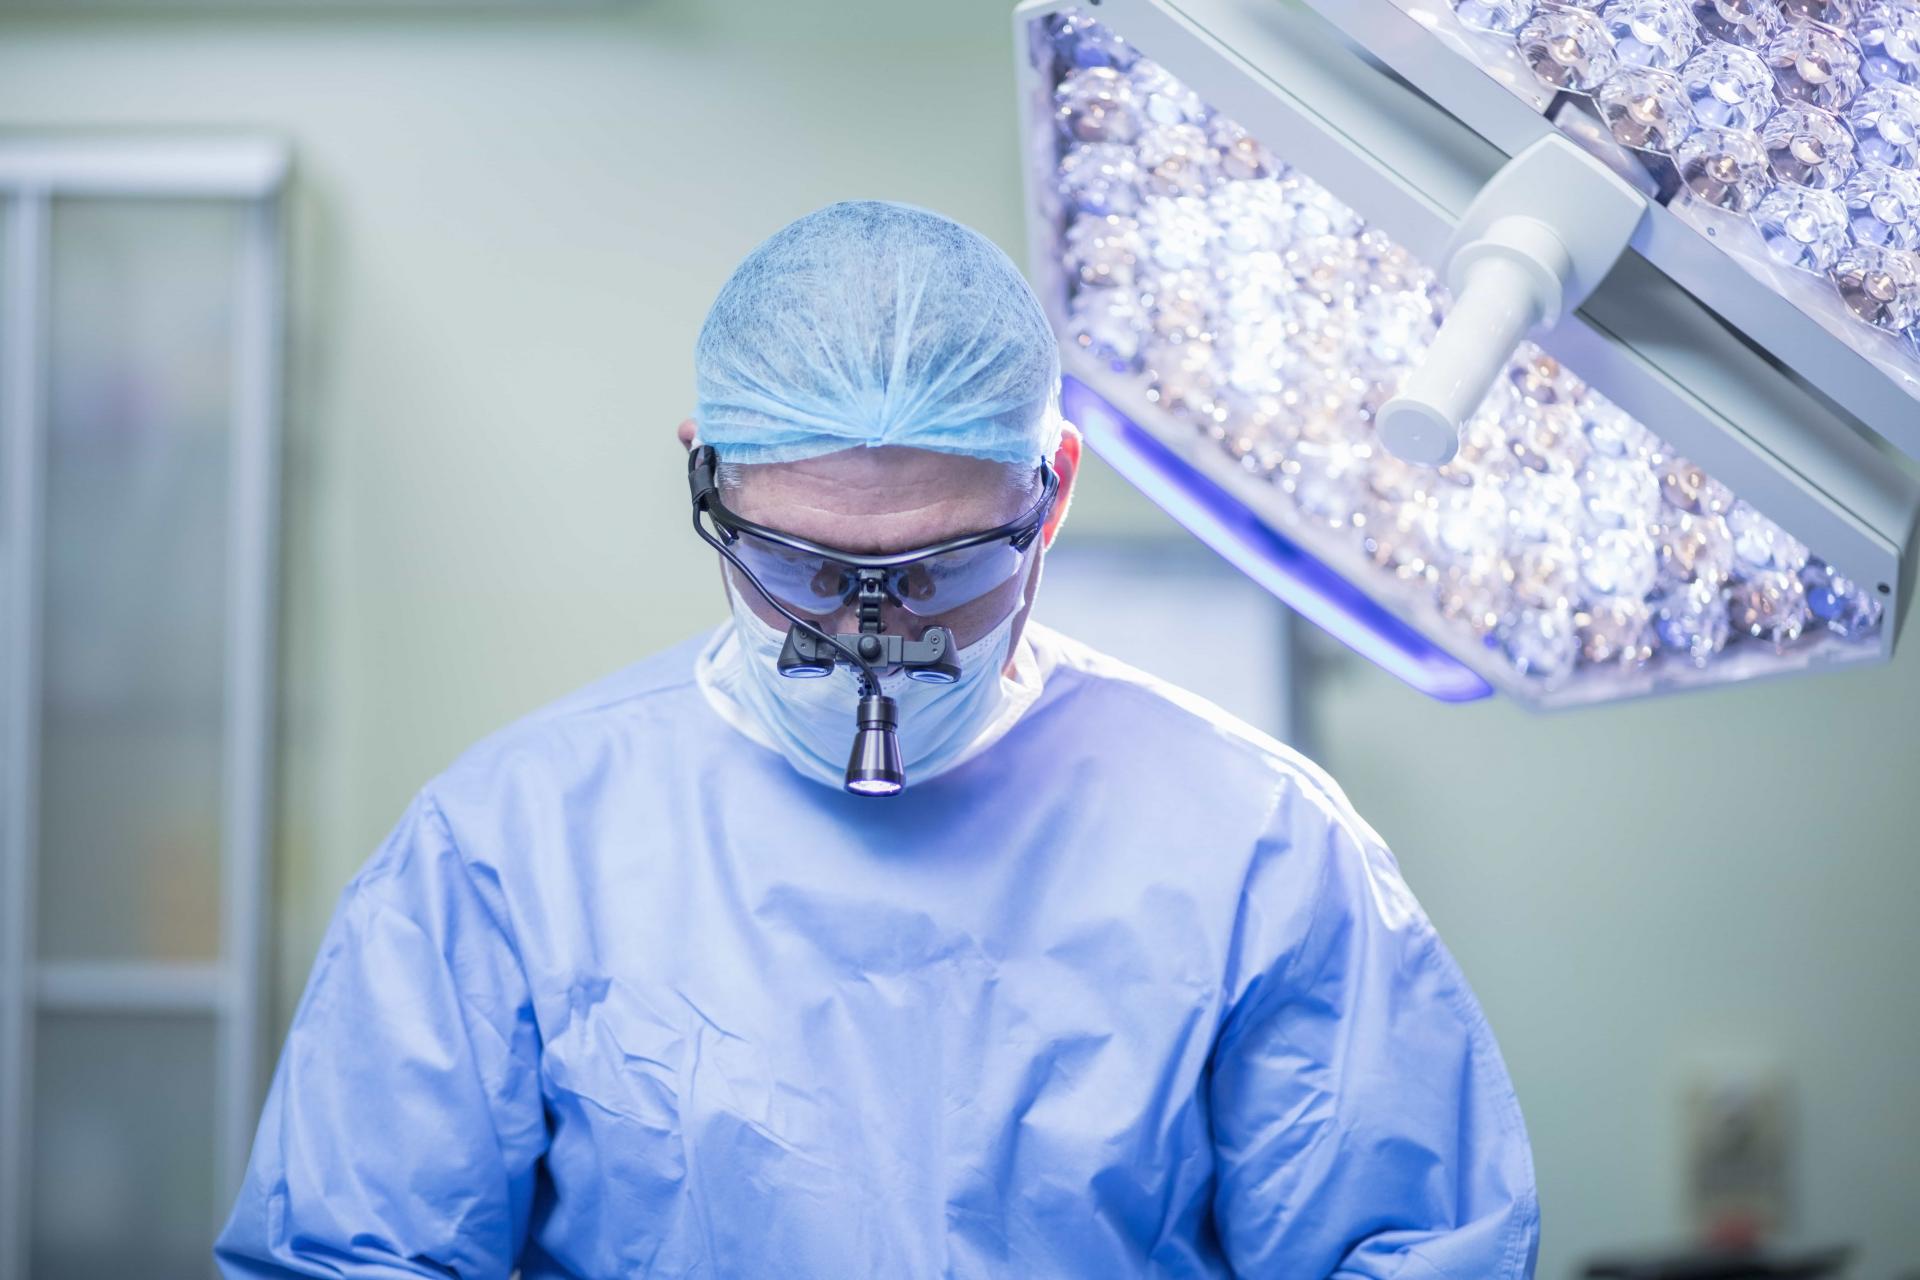 Oculoplastic and reconstructive surgery